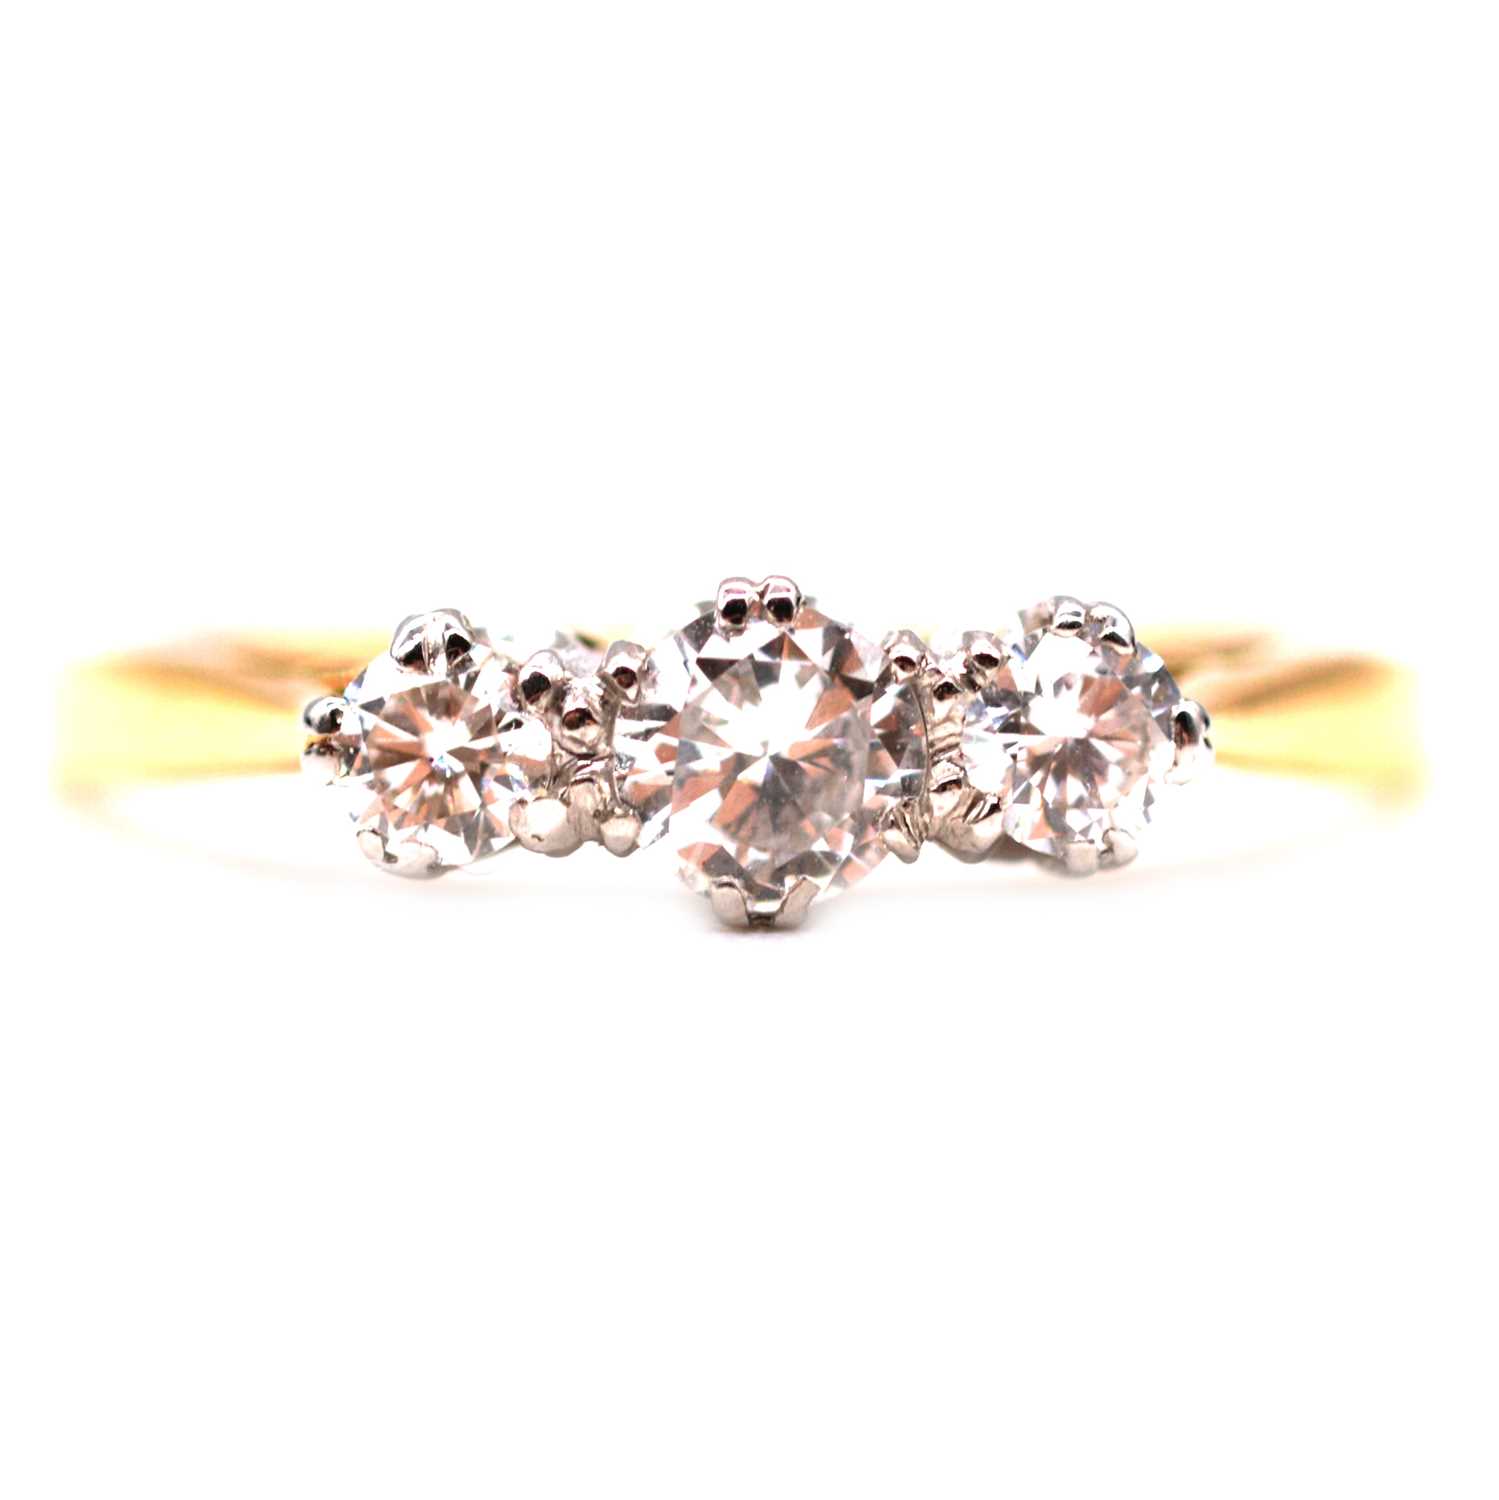 A diamond three stone ring.